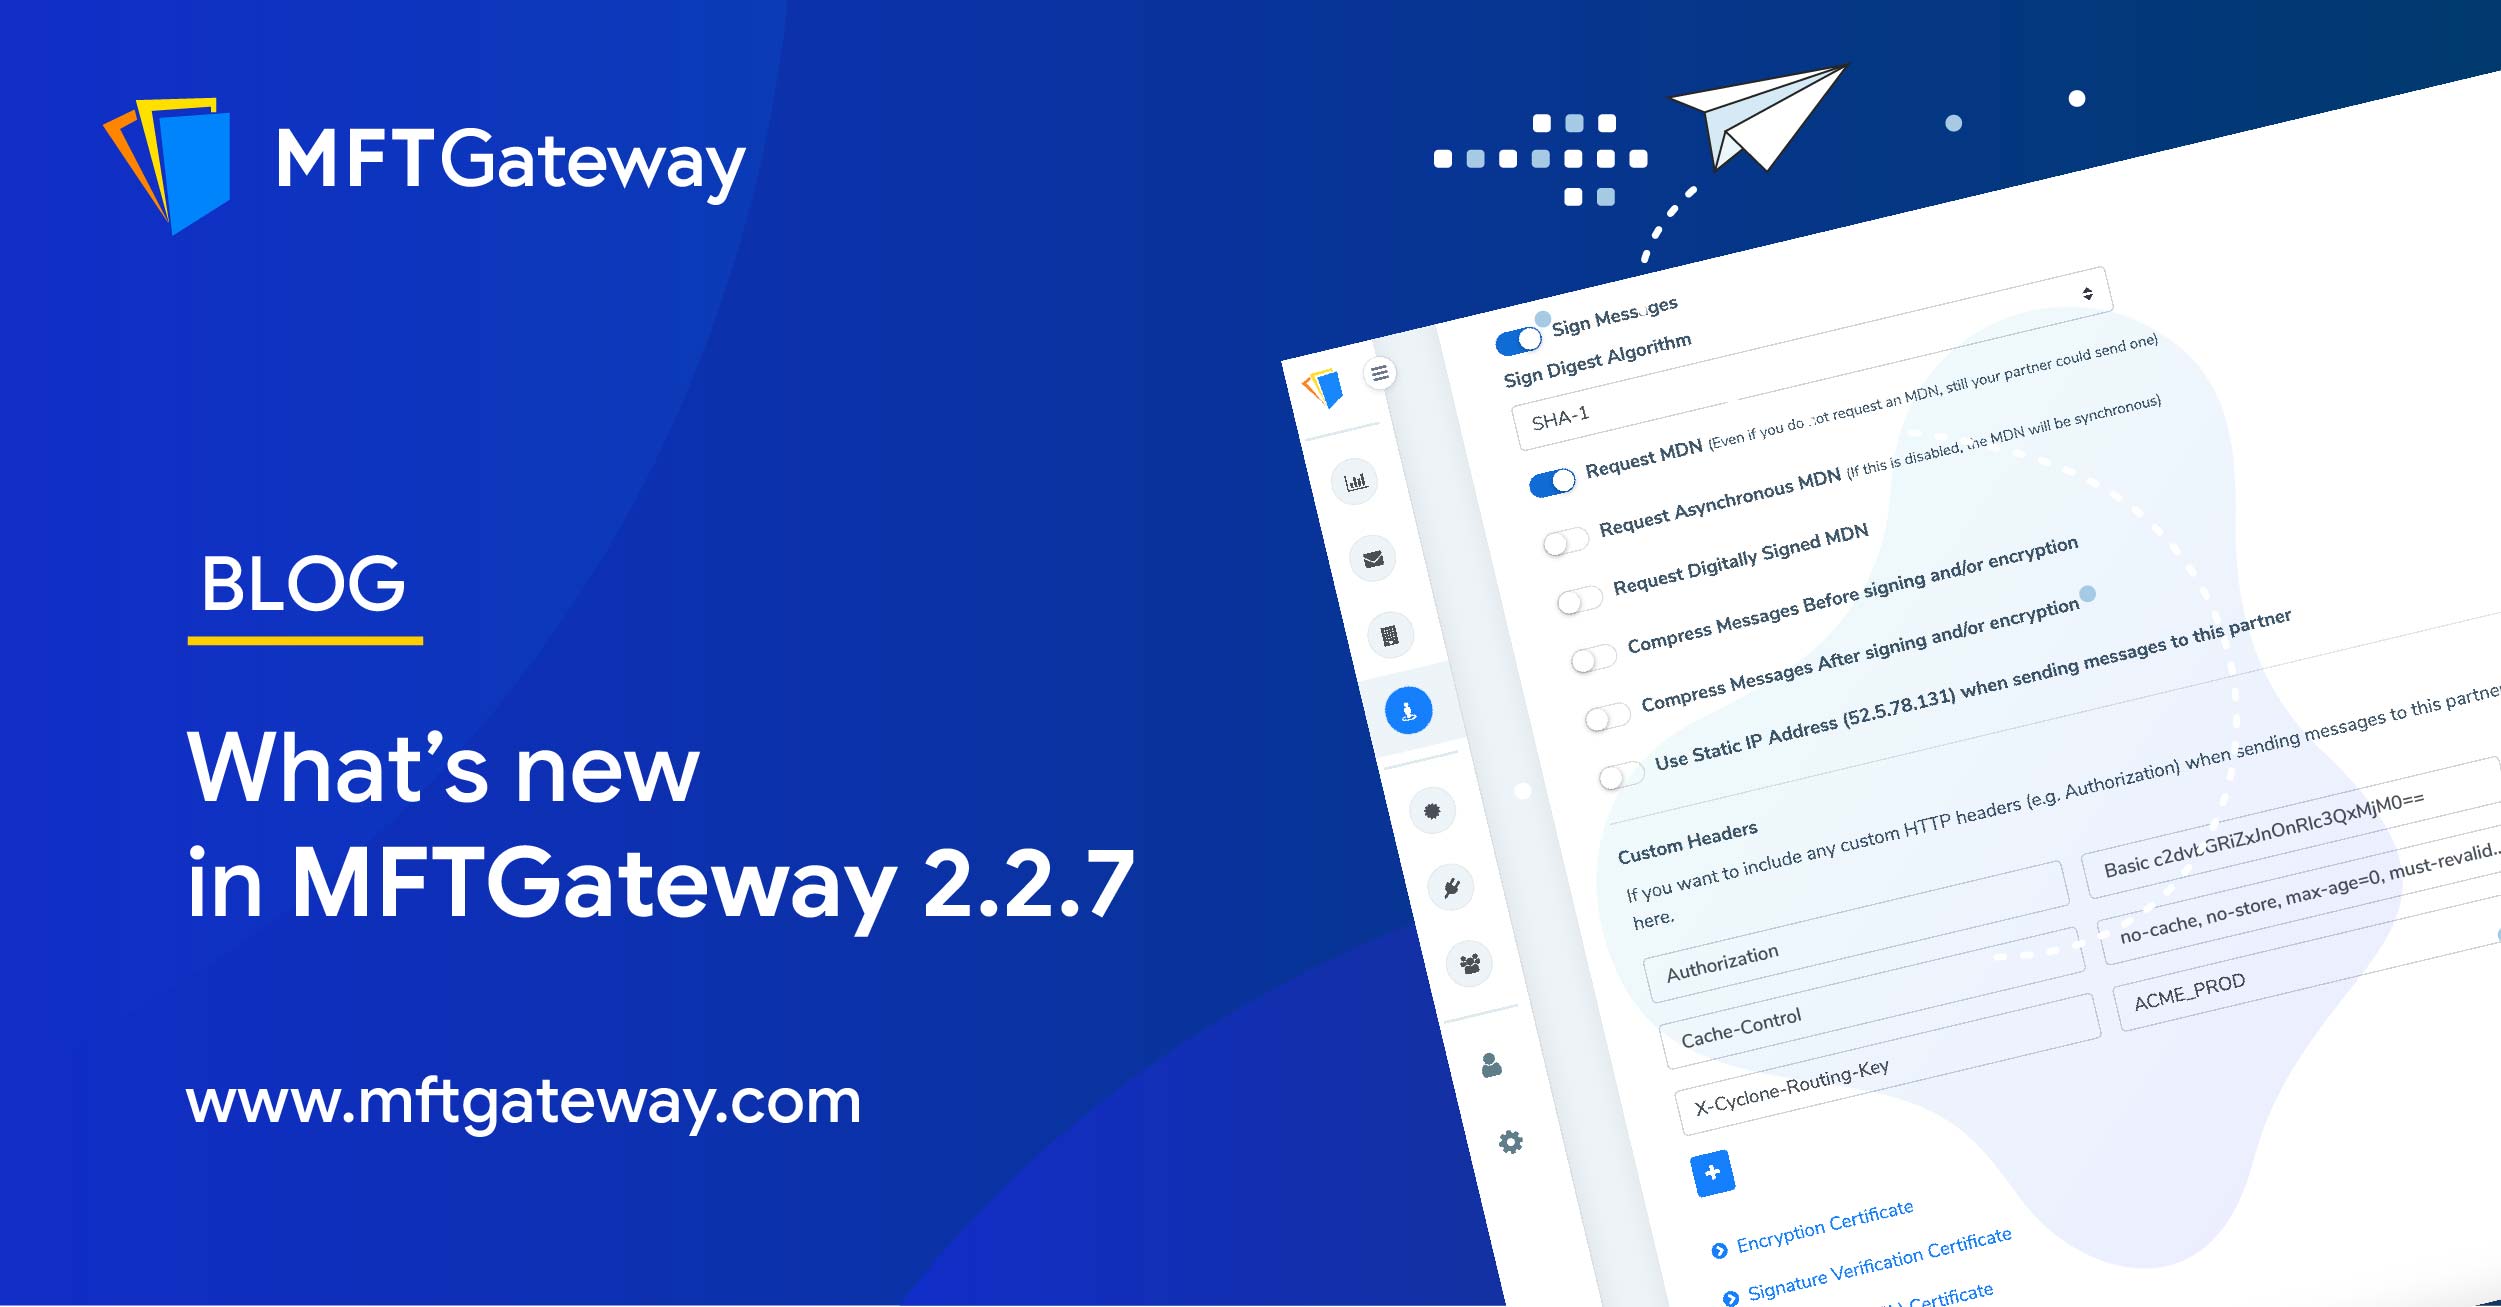 MFT Gateway 2.2.7 | Custom Header Support for Outgoing Messages